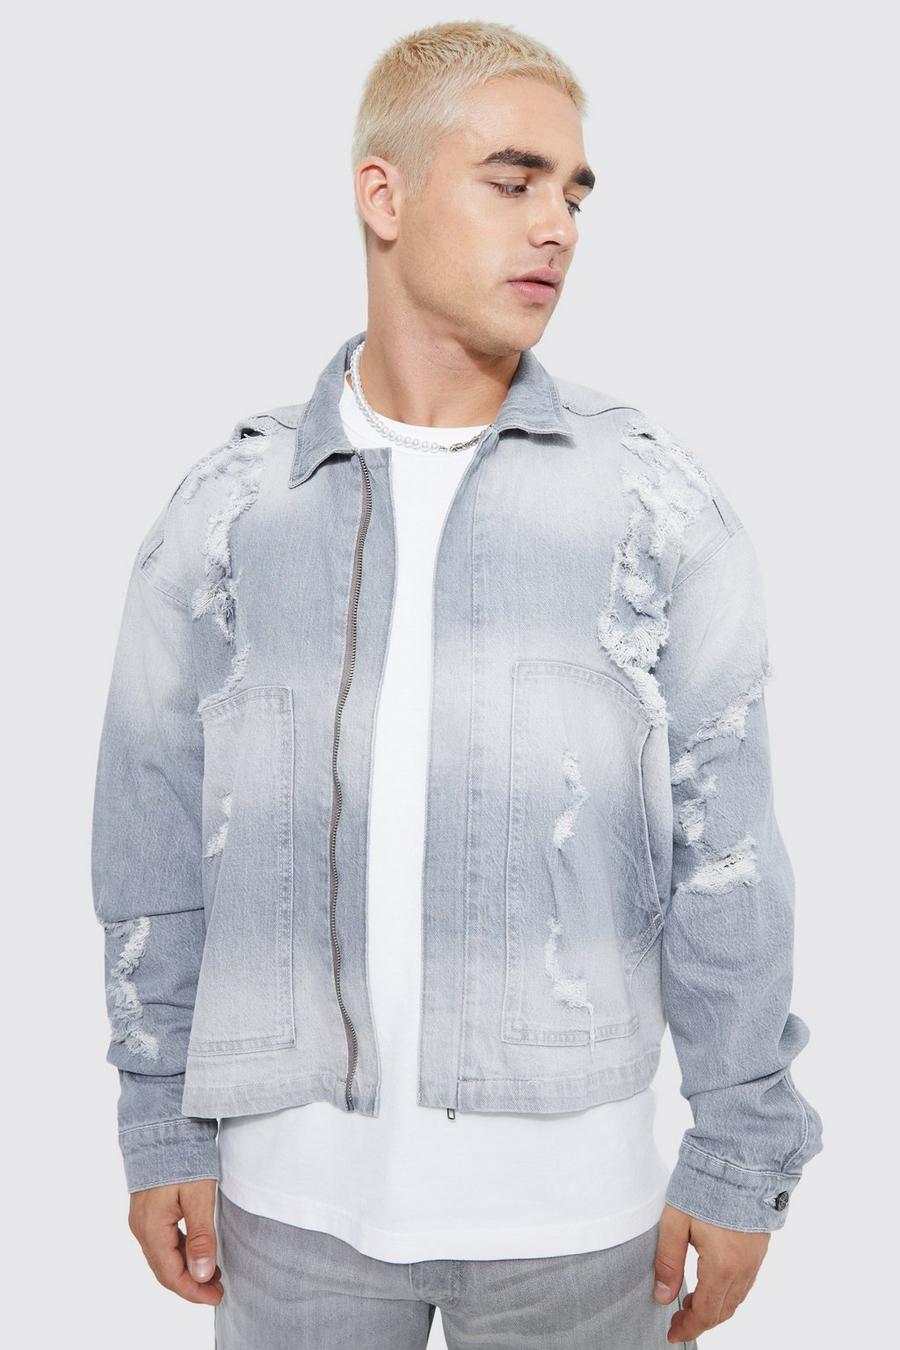 Oversized Boxy Fit Distressed Denim Jacket, Ice grey